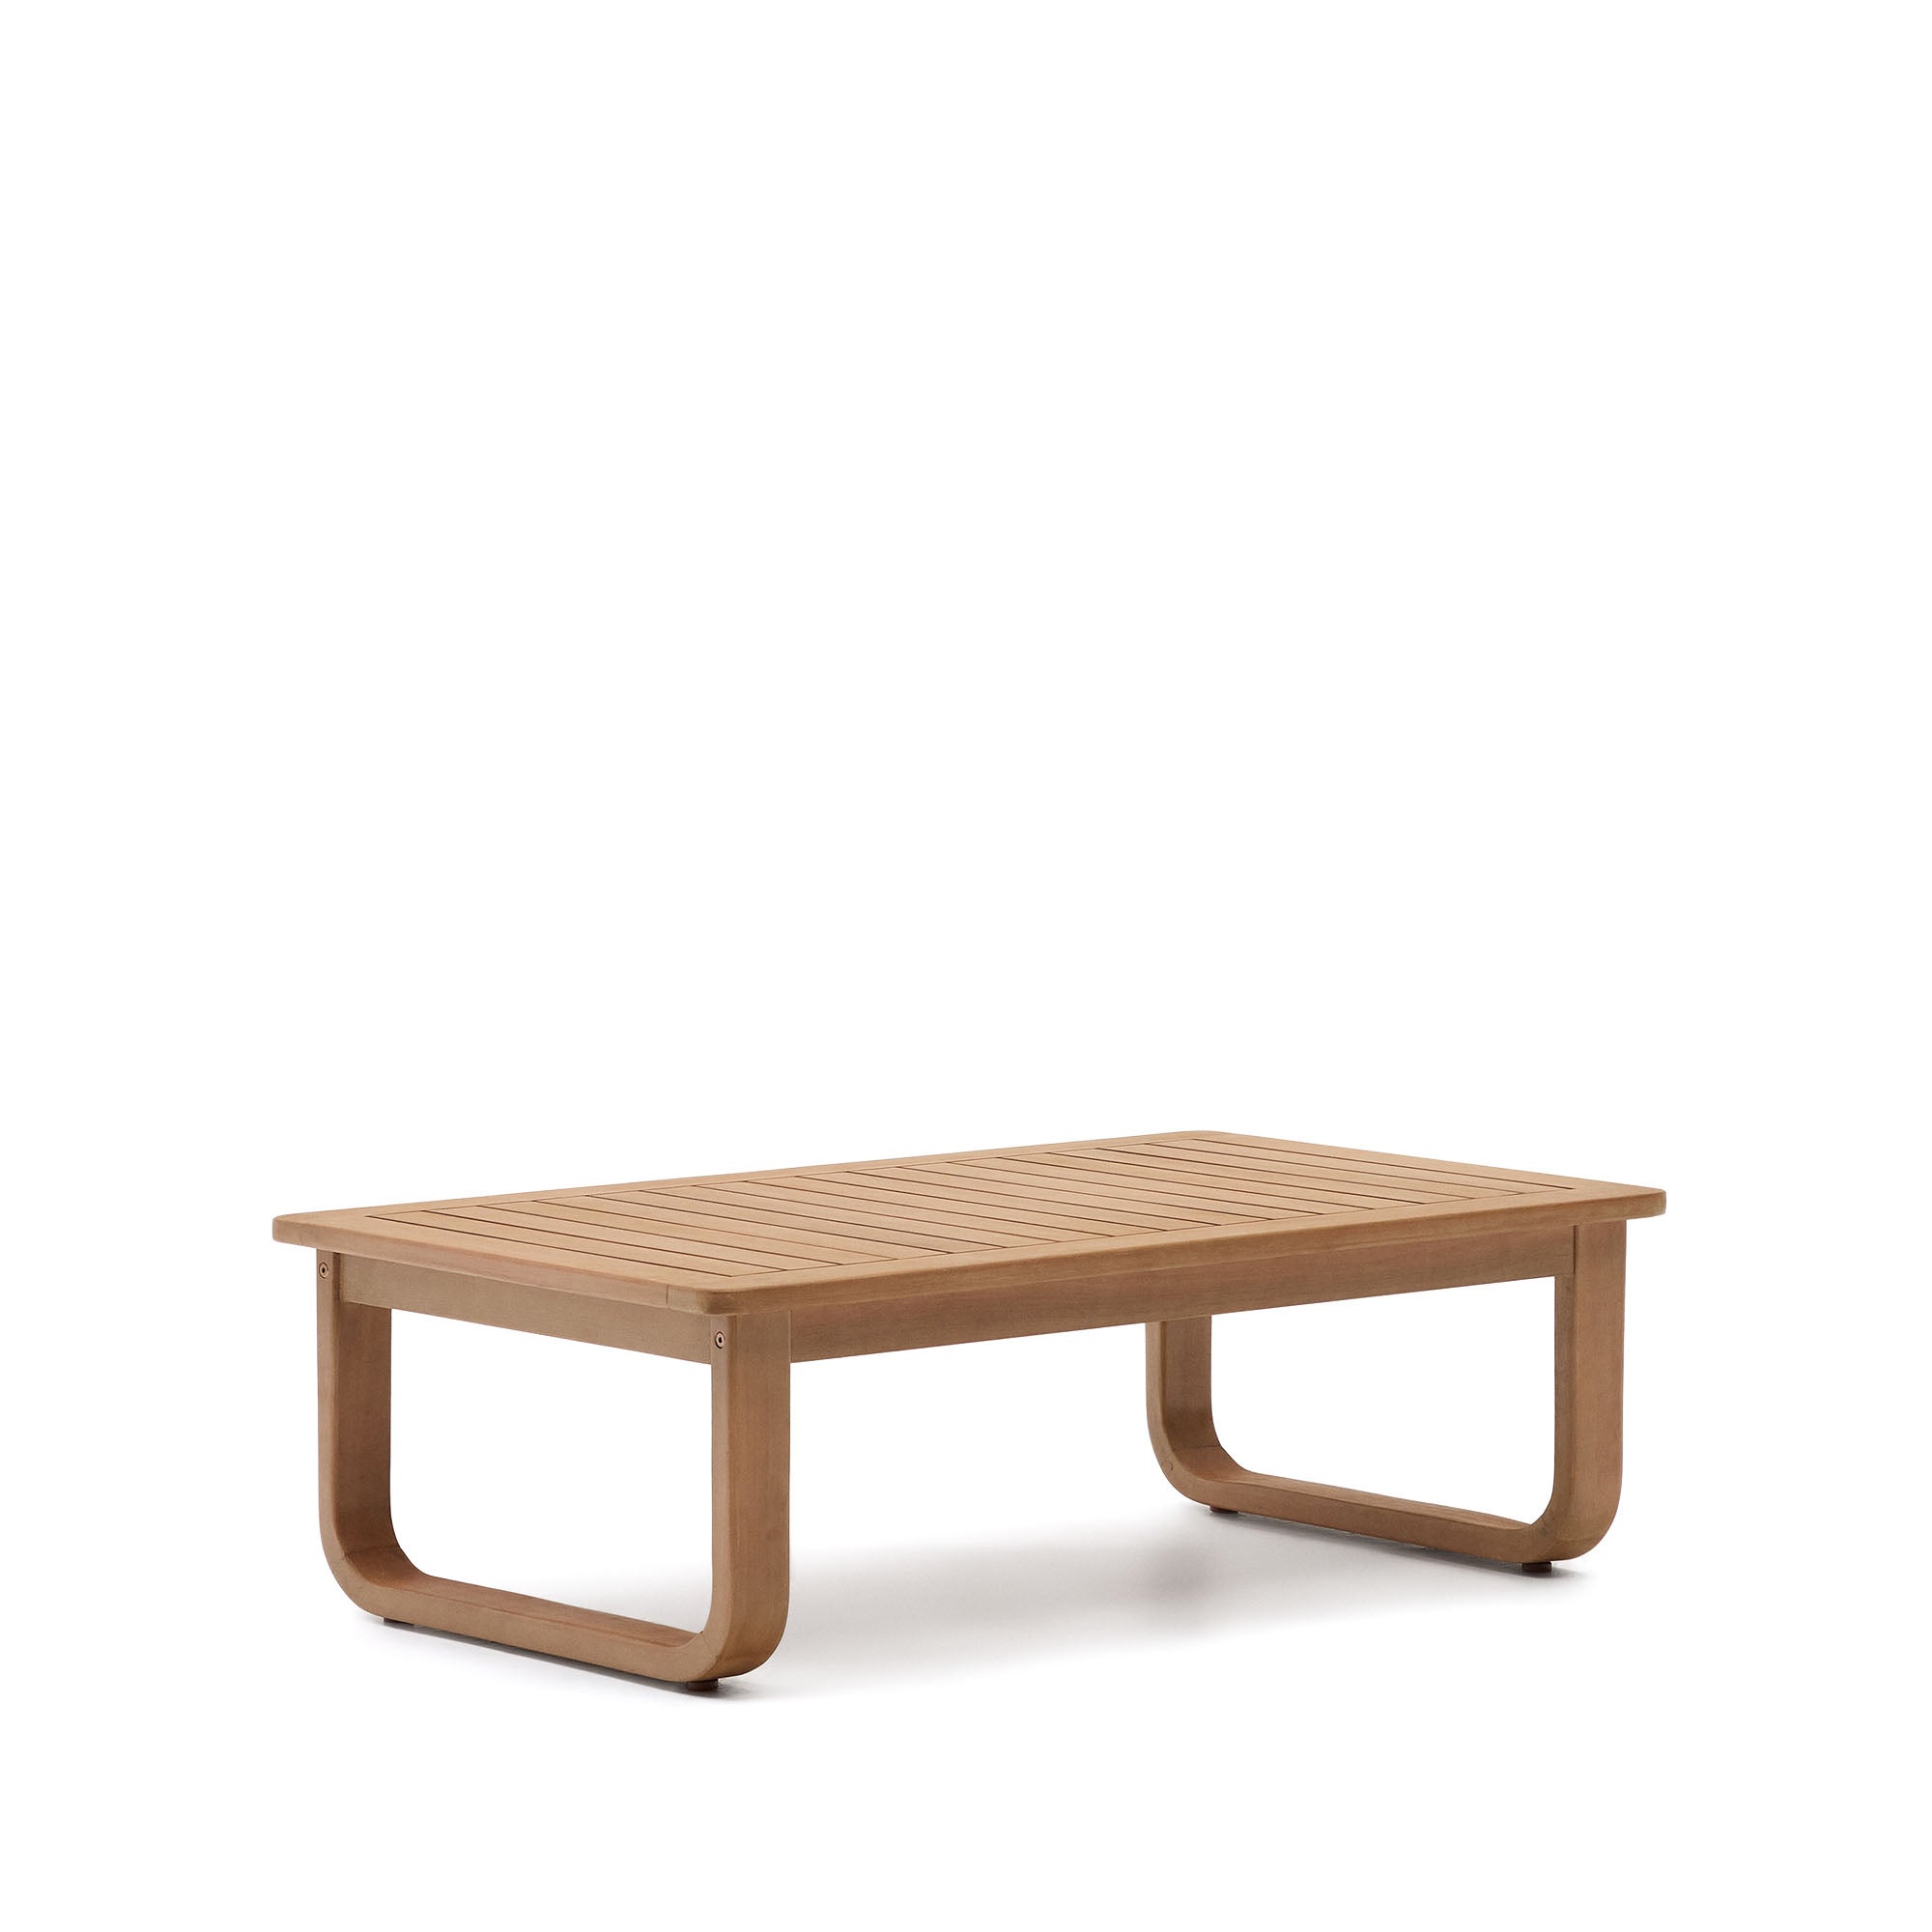 Sacaleta solid eucalyptus wood coffee table, 100% outdoor suitable 100 x 60 cm